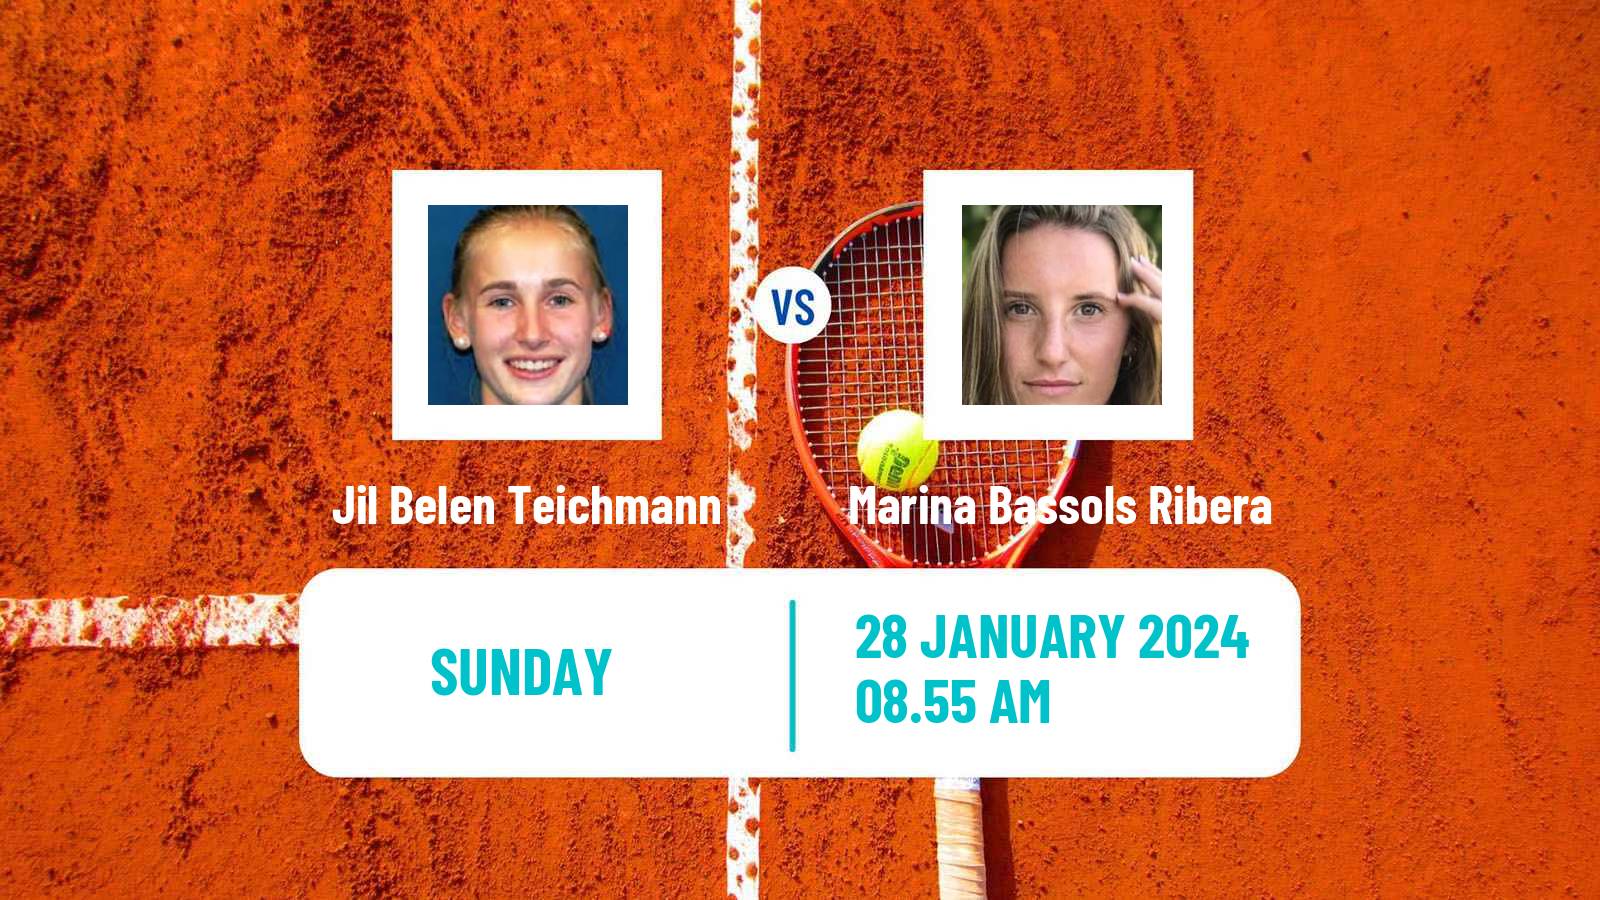 Tennis WTA Linz Jil Belen Teichmann - Marina Bassols Ribera